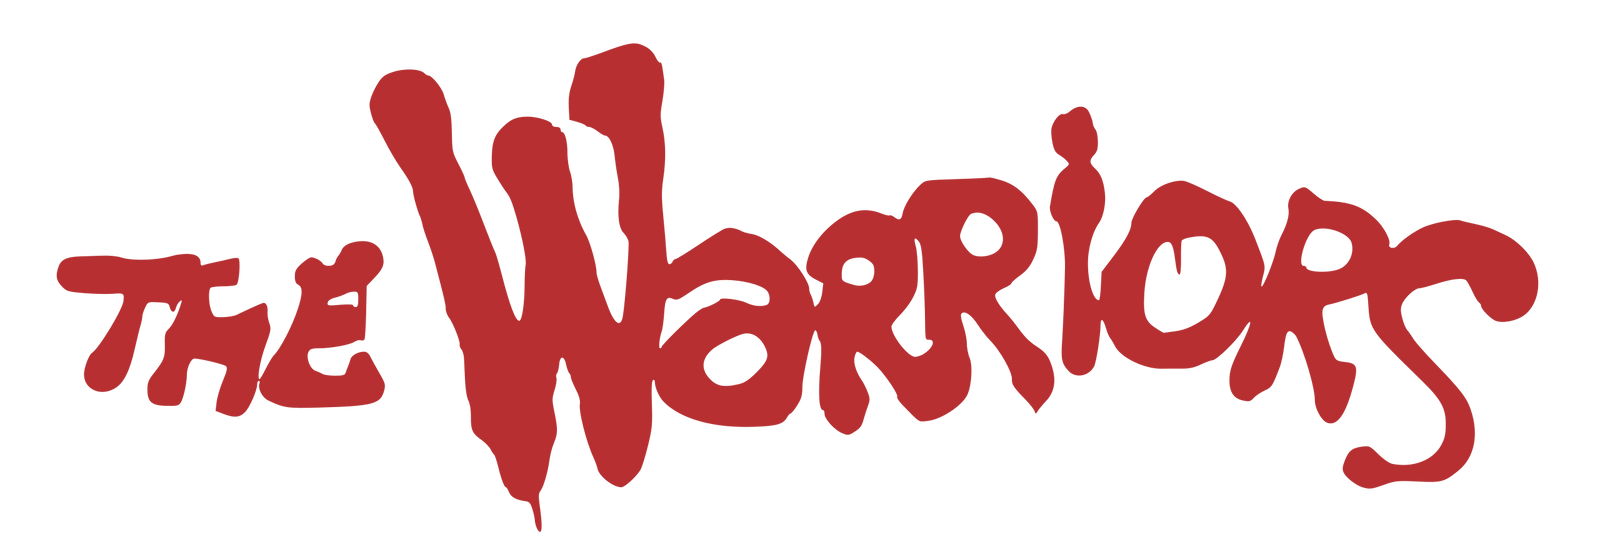 The Warriors logo.